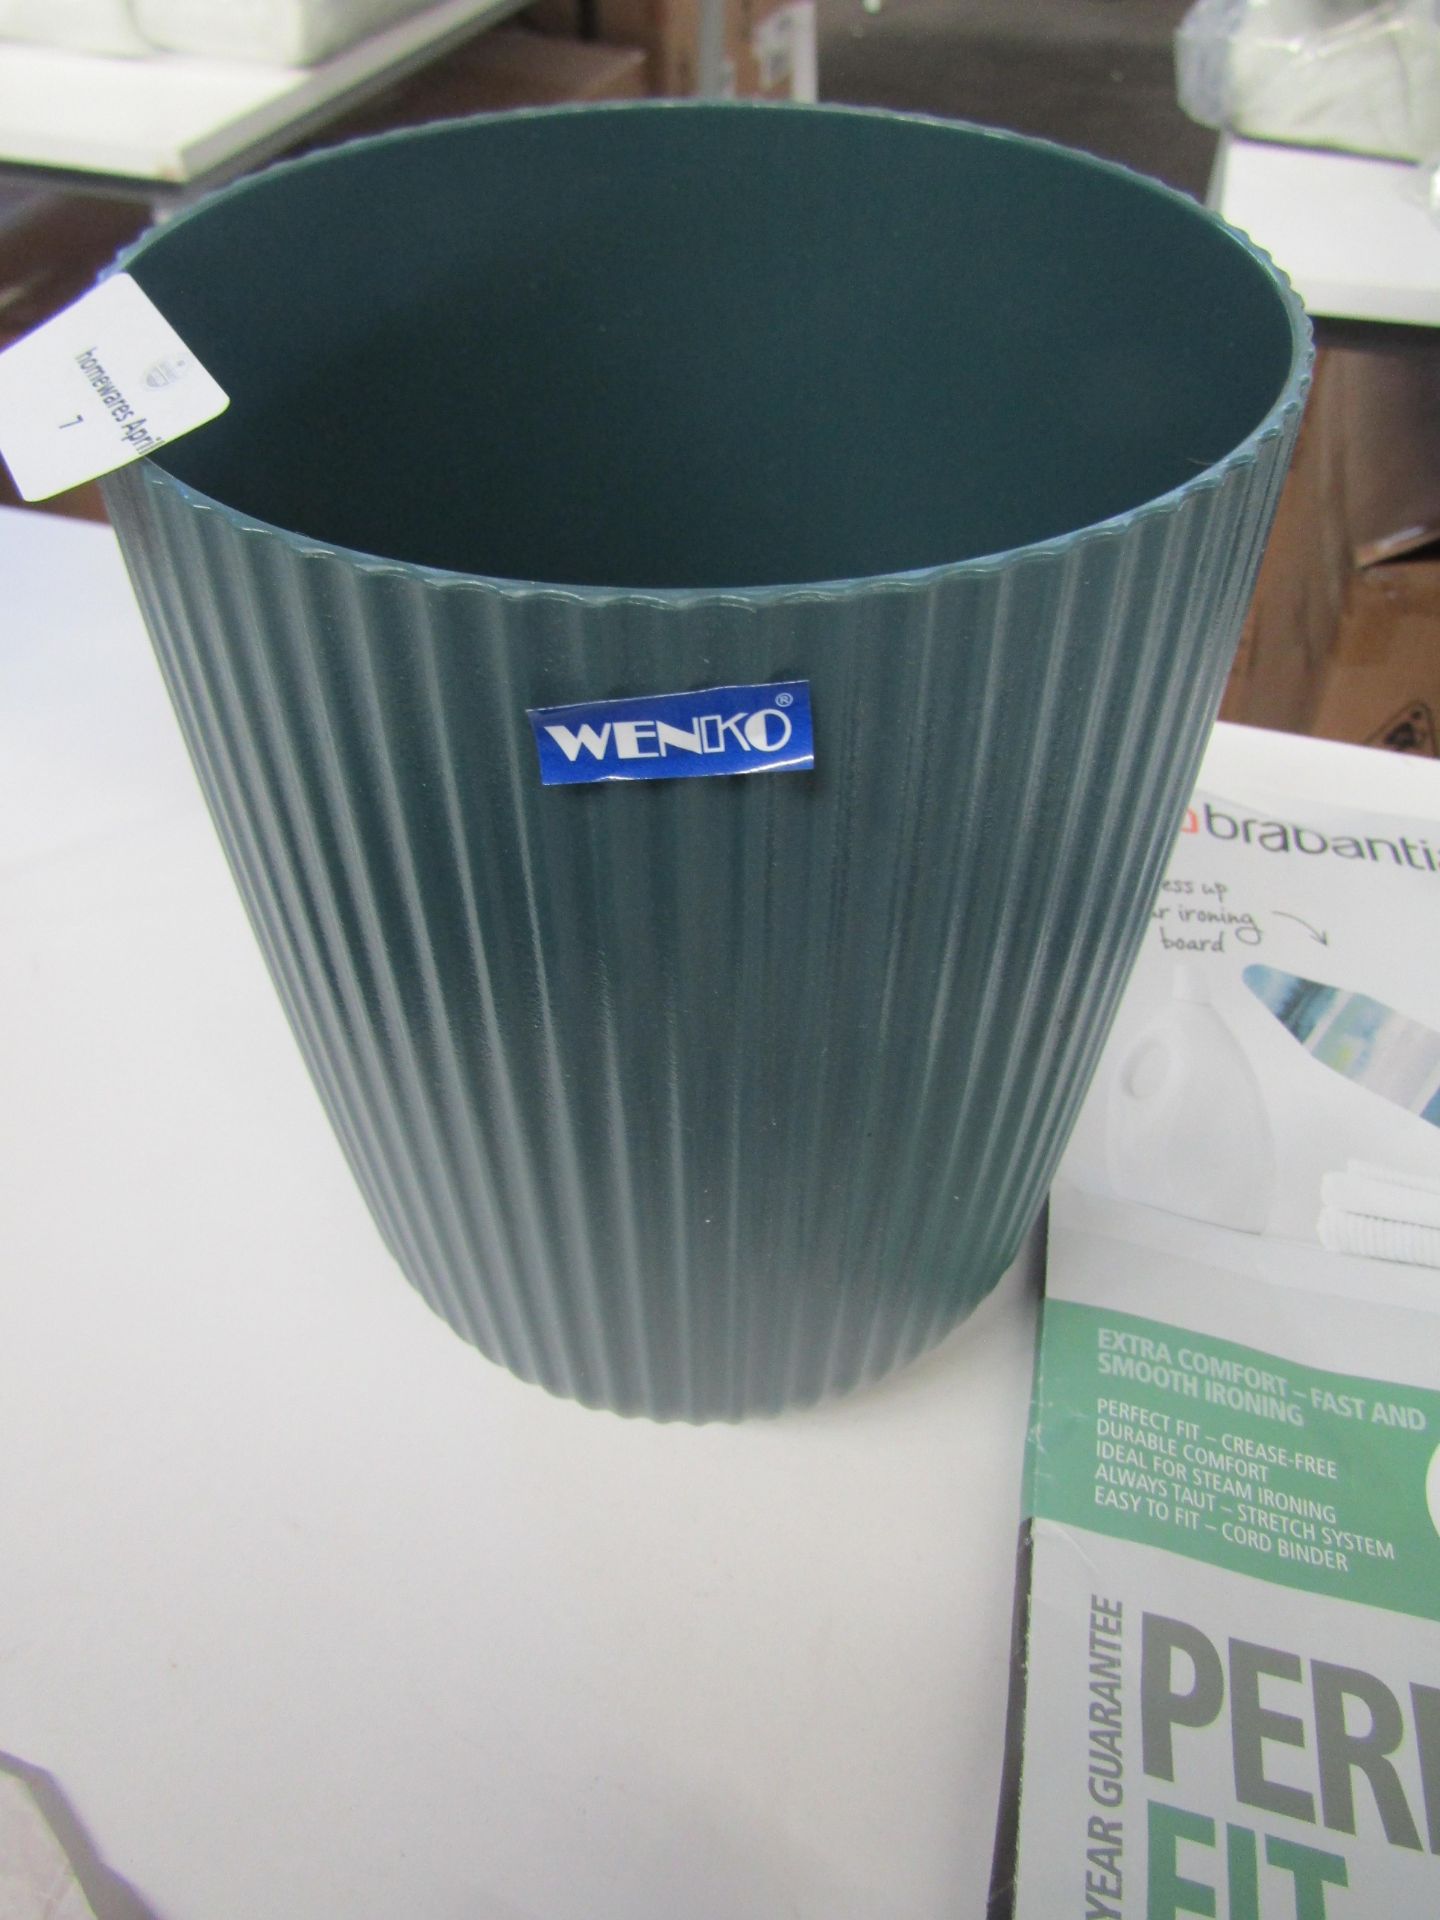 Wenko - Ribbed Plastic Planter - Good Condition.